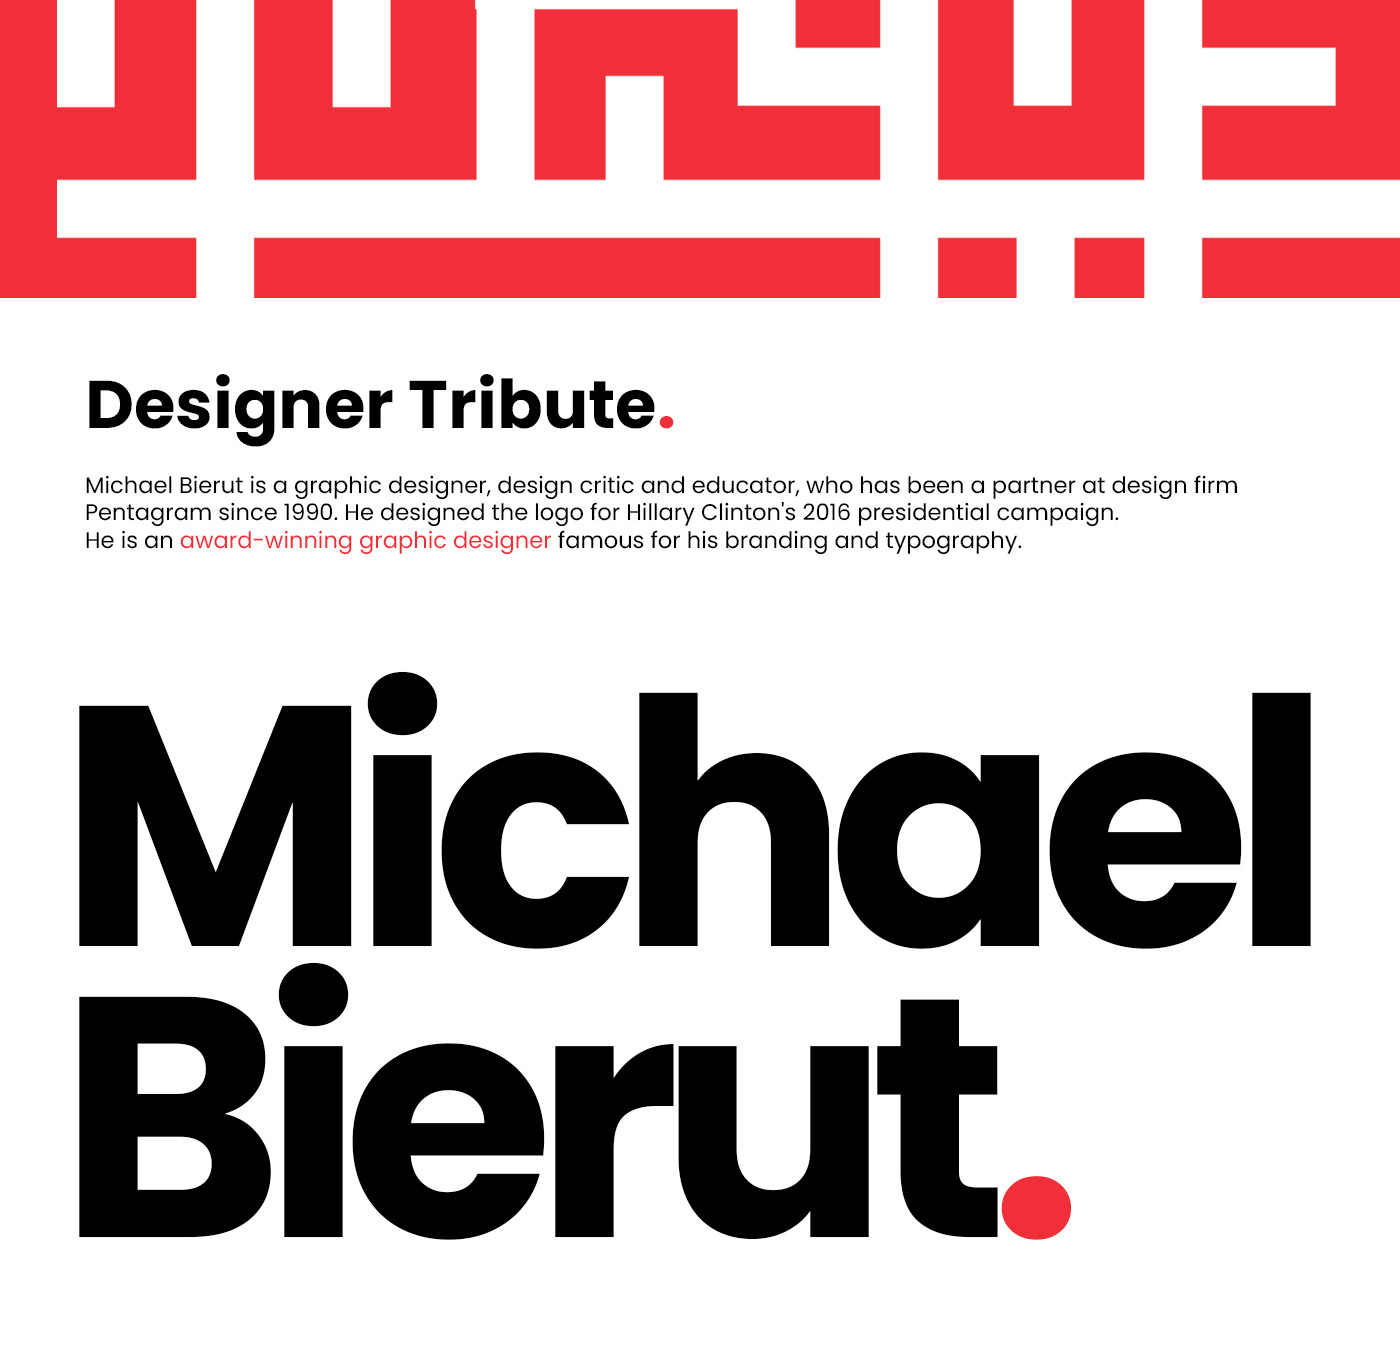 Michael Bierut - Designer tribute poster on Behance